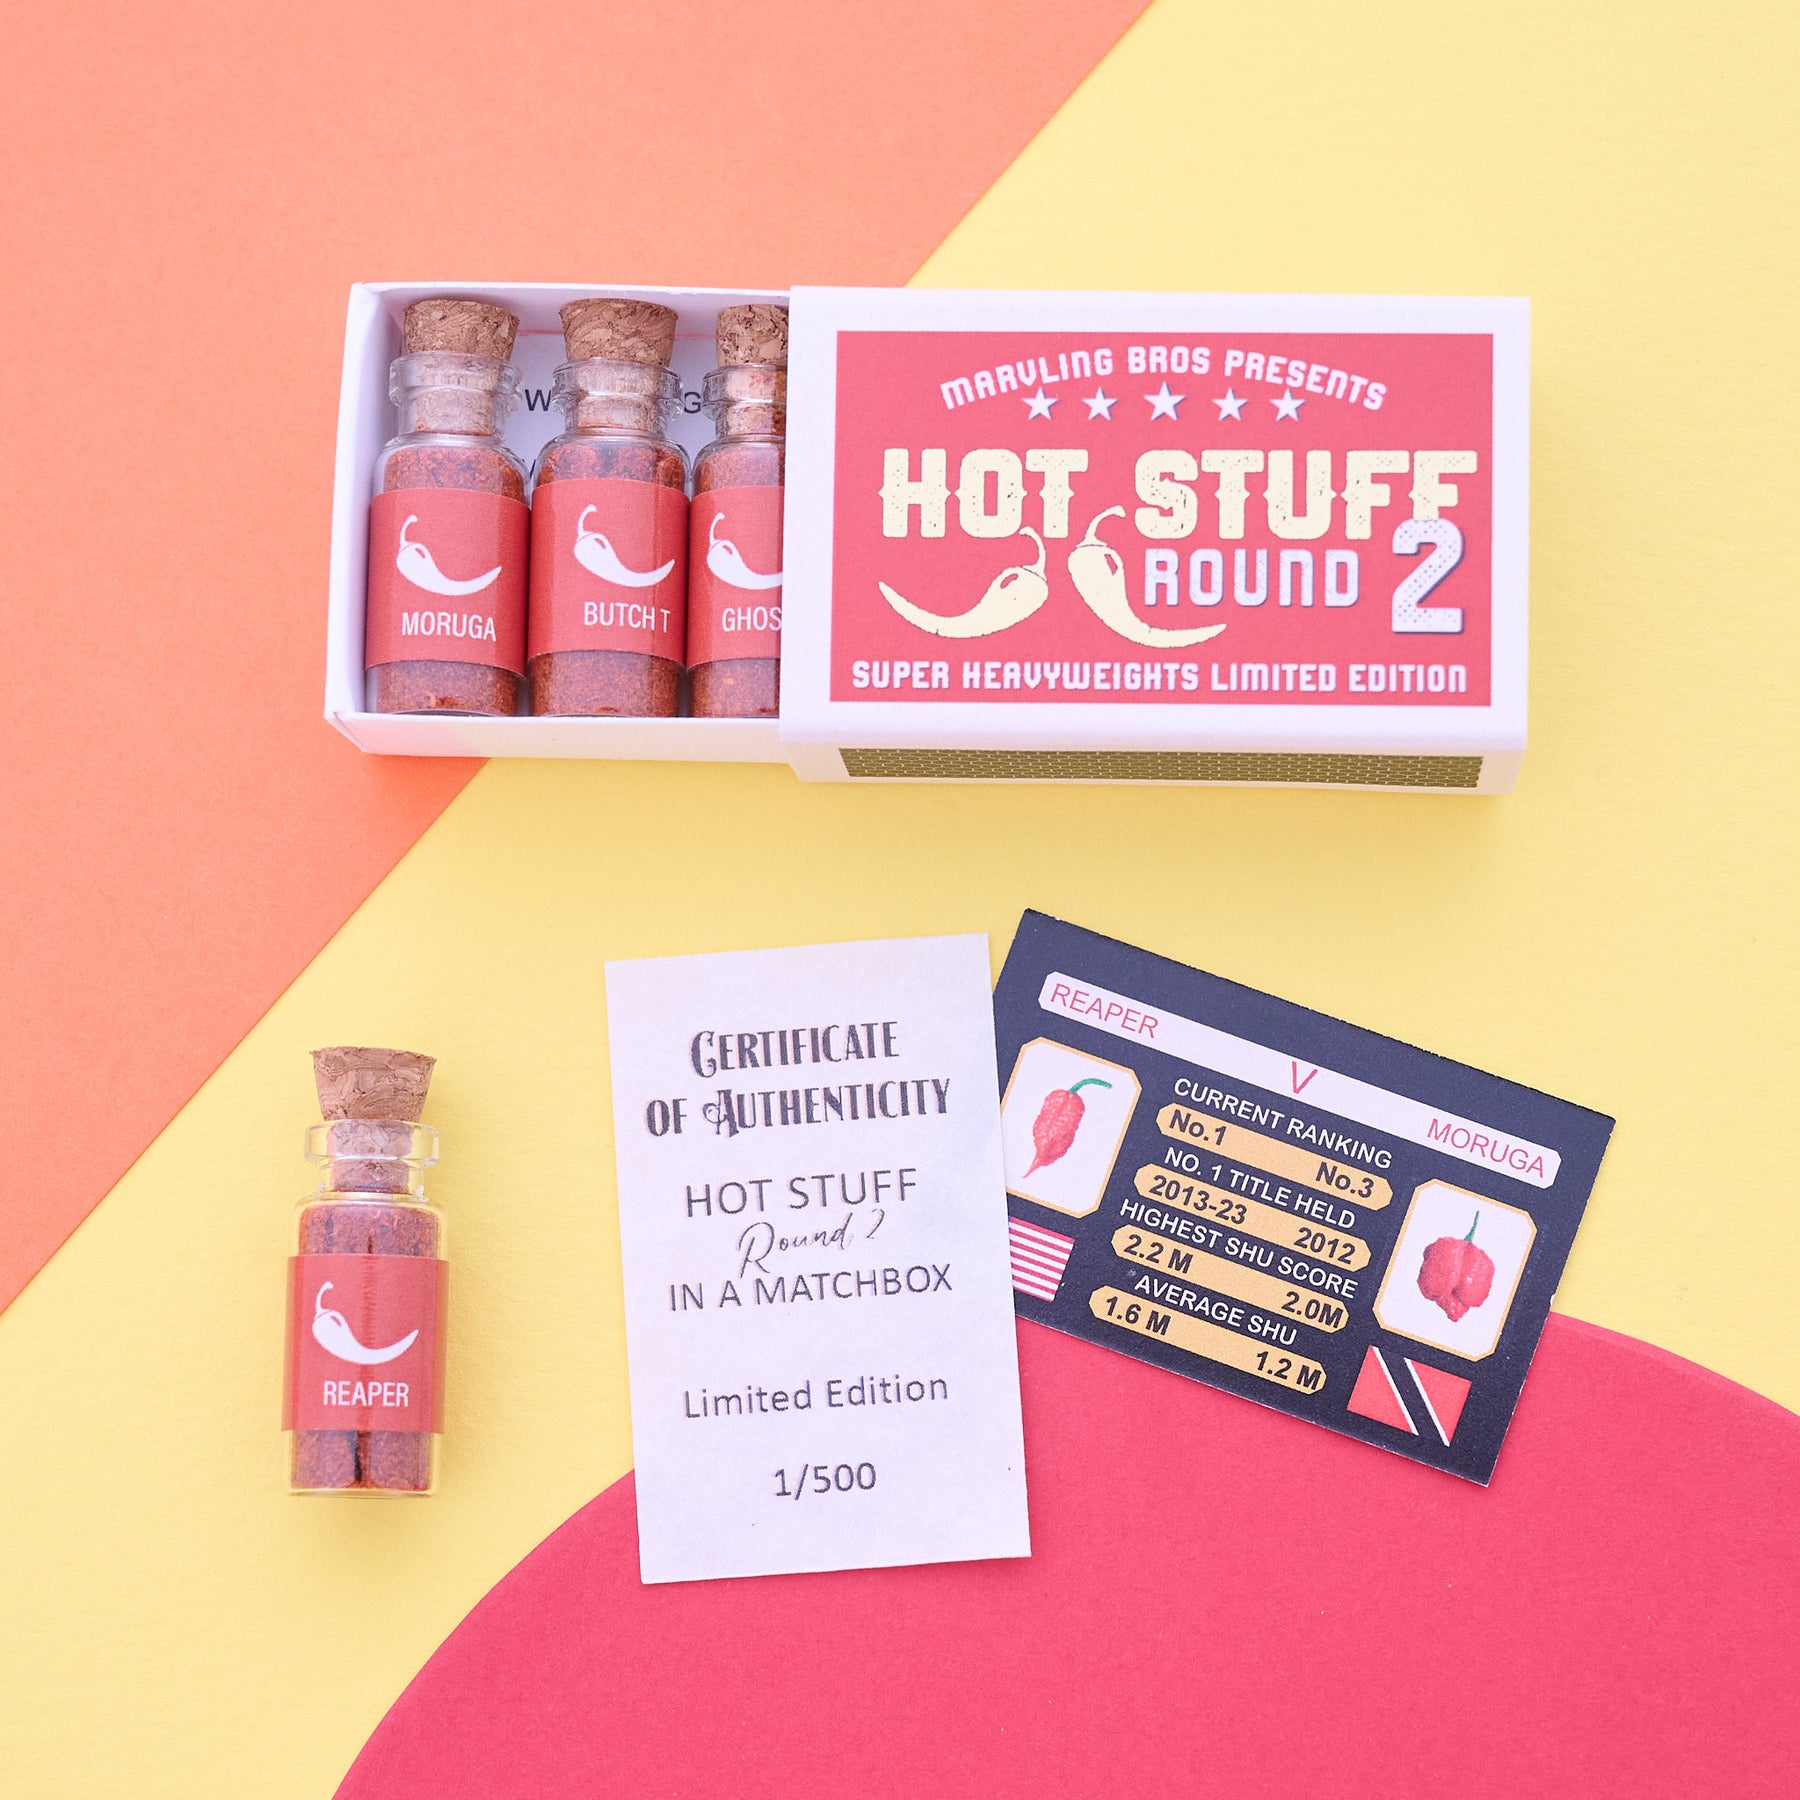 Hot Stuff Round 2 - Limited Edition!